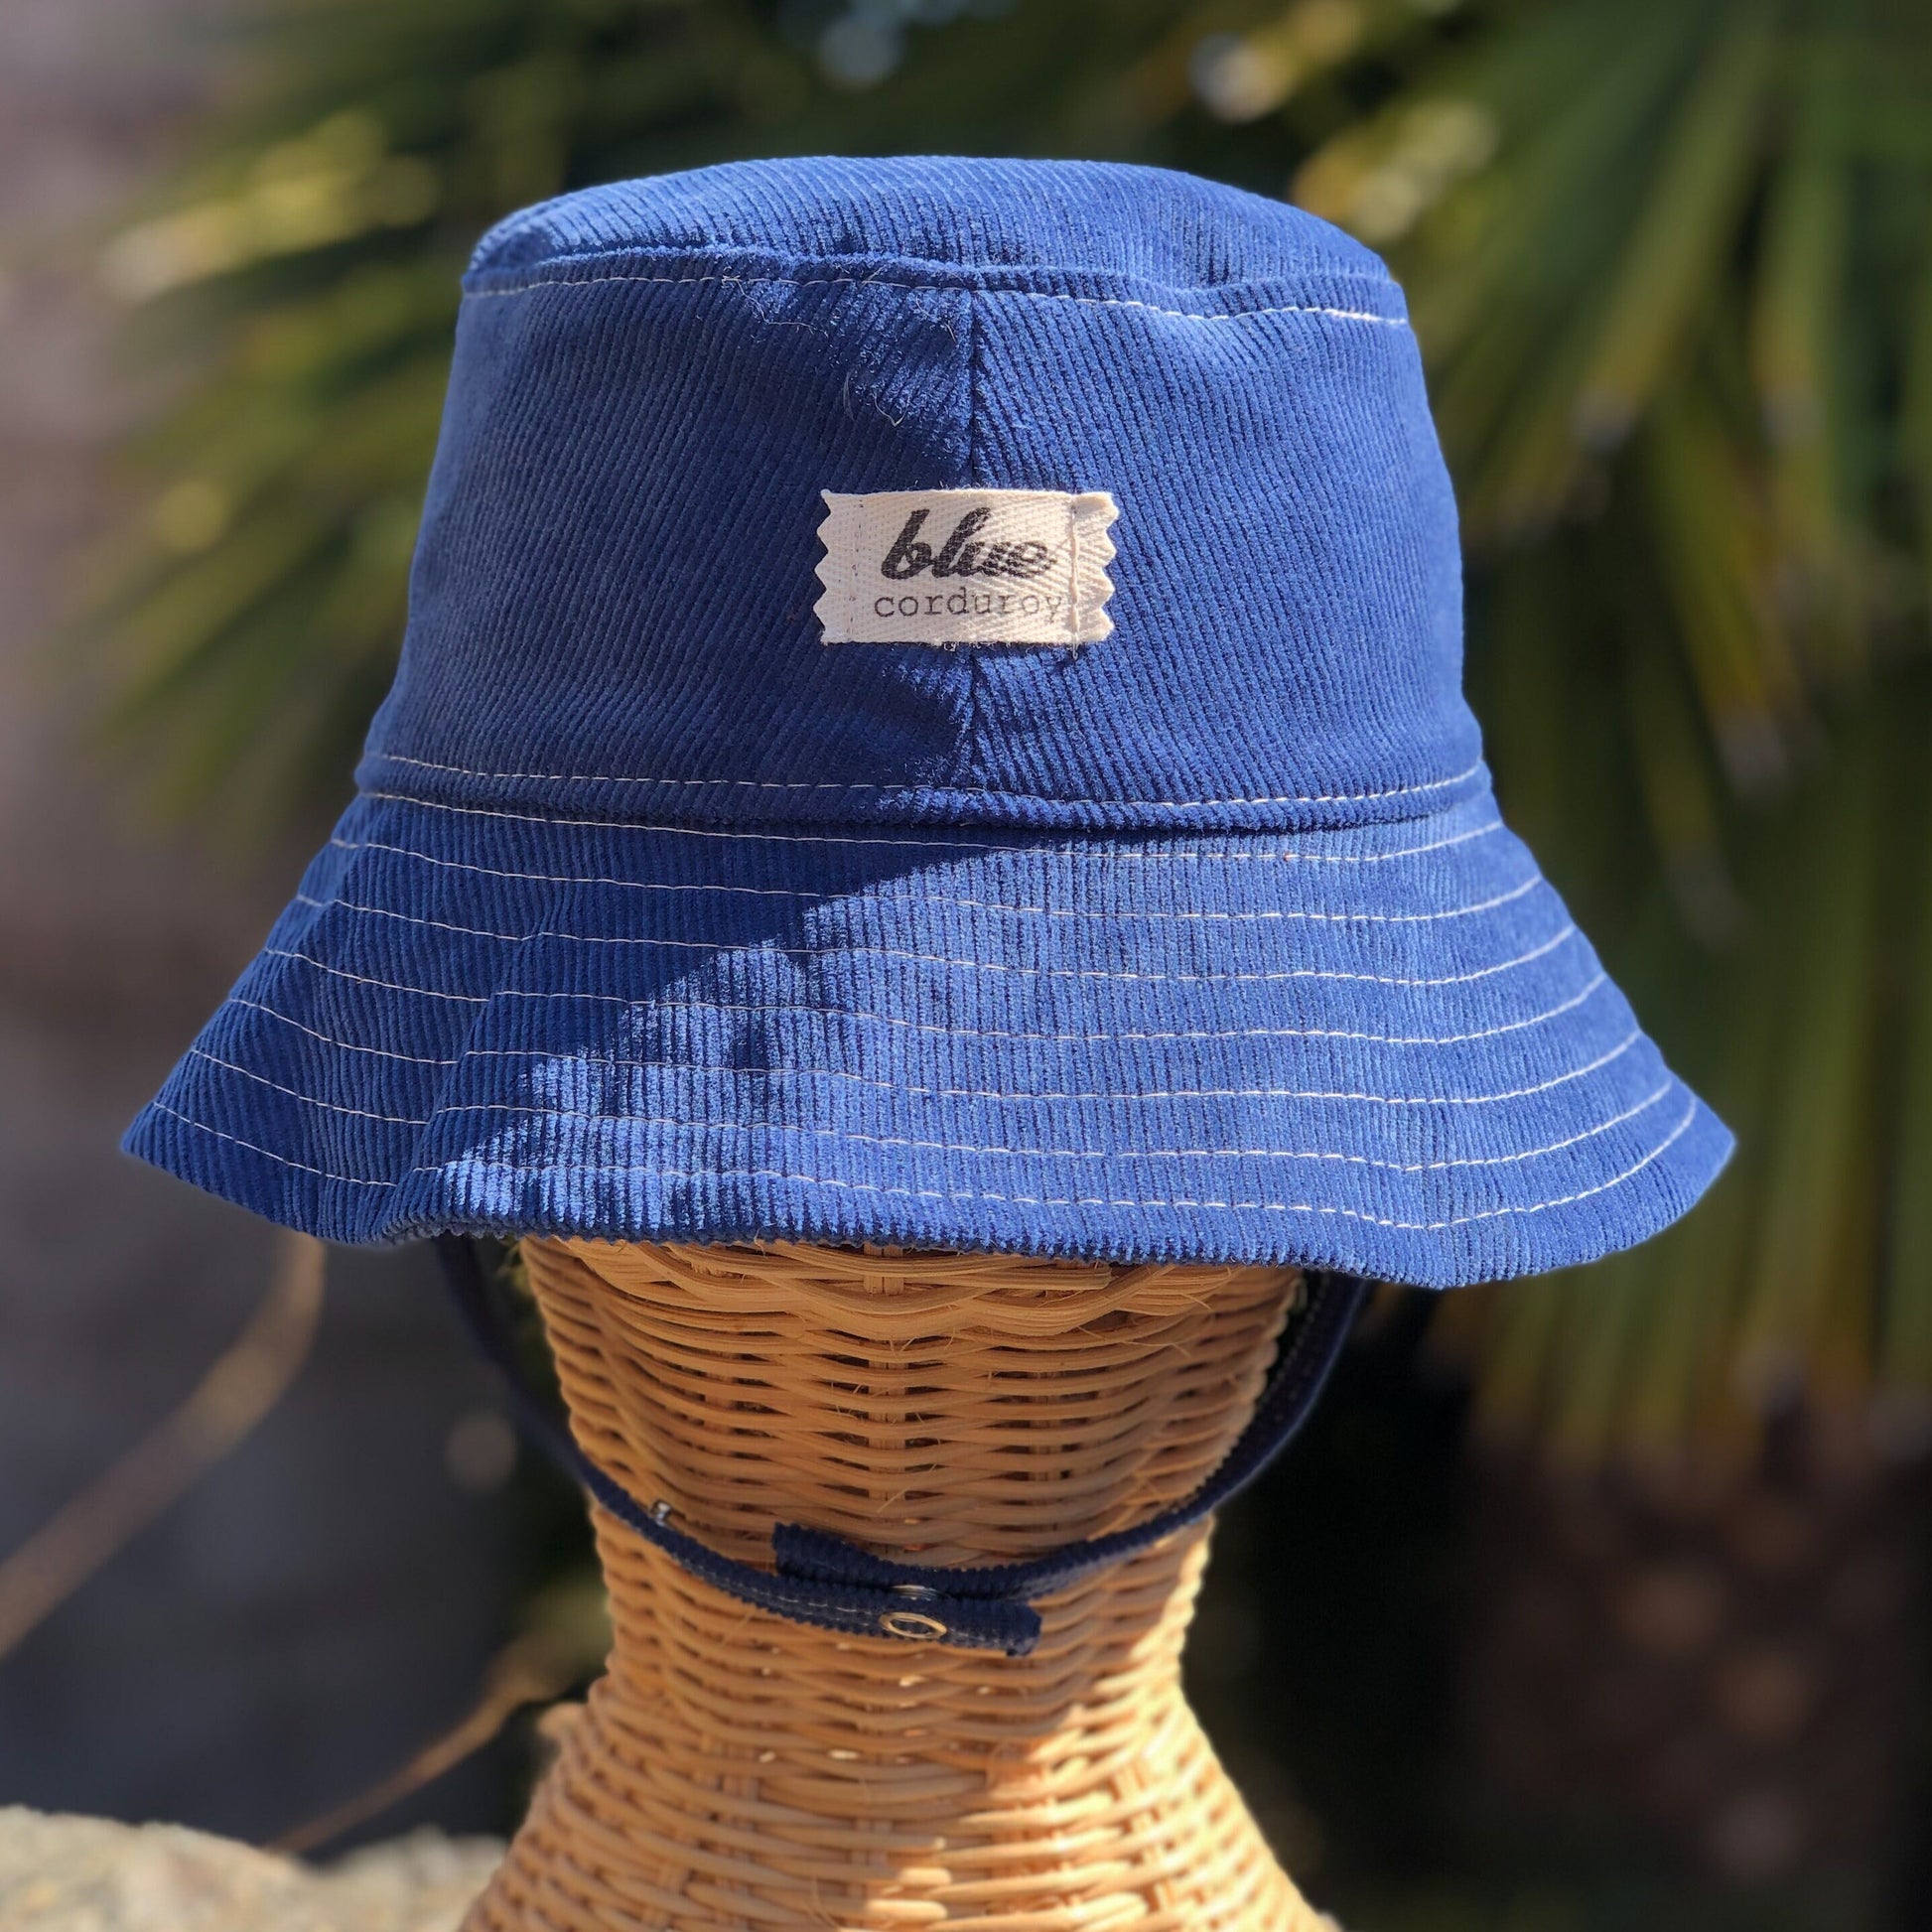 Blue Corduroy Bucket Hat for Babies on rattan mannequin head.